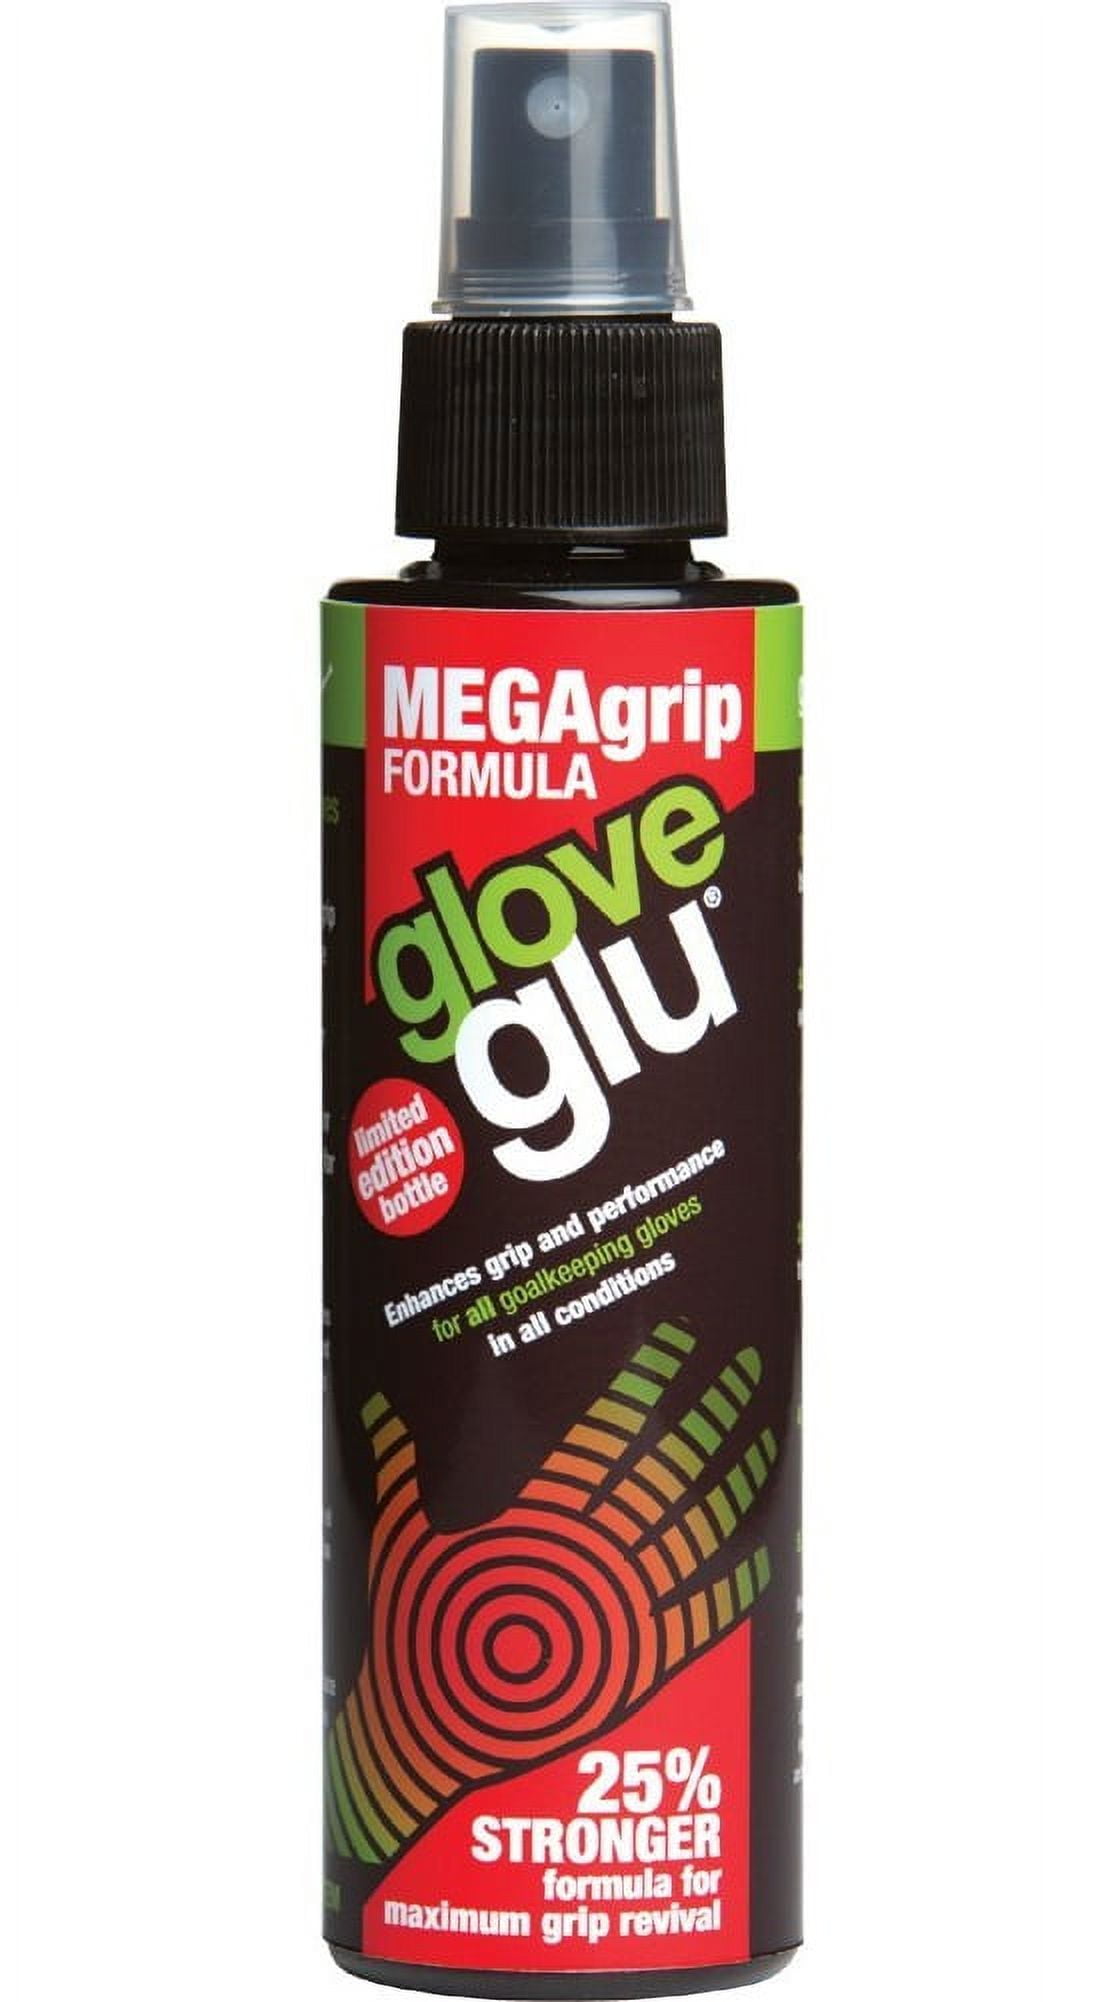 Glove Glue Goalkeeping Glove Glue Spray 30ml